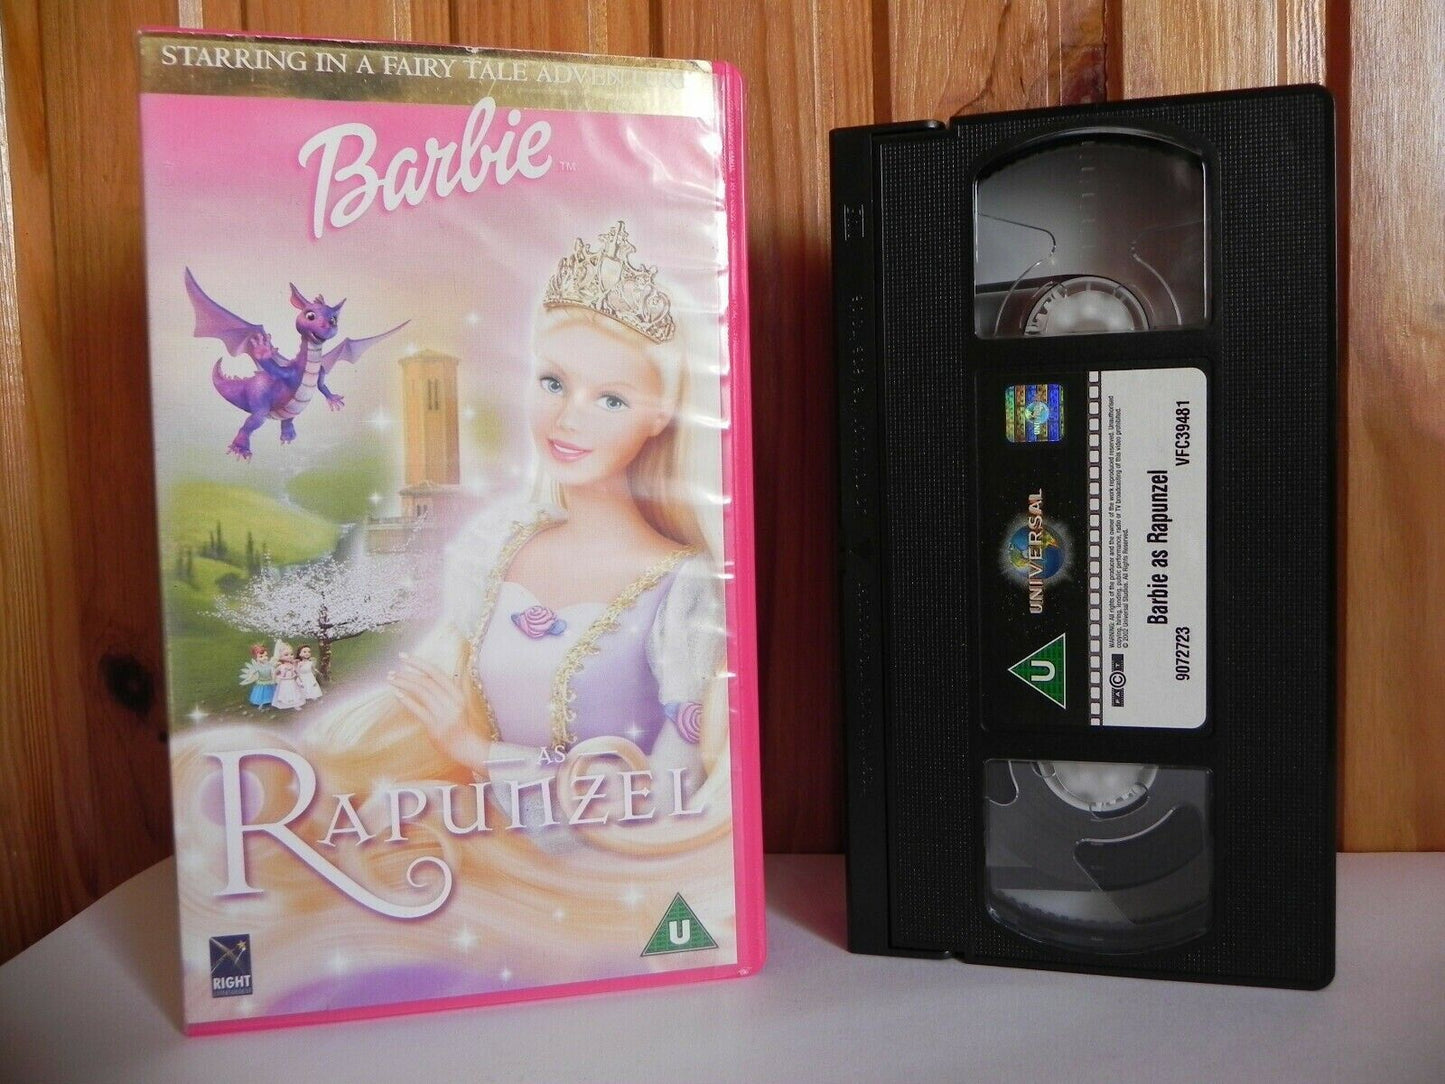 Barbie The Rapunzel - Universal - Animated - Adventure - Children's - Pal VHS-